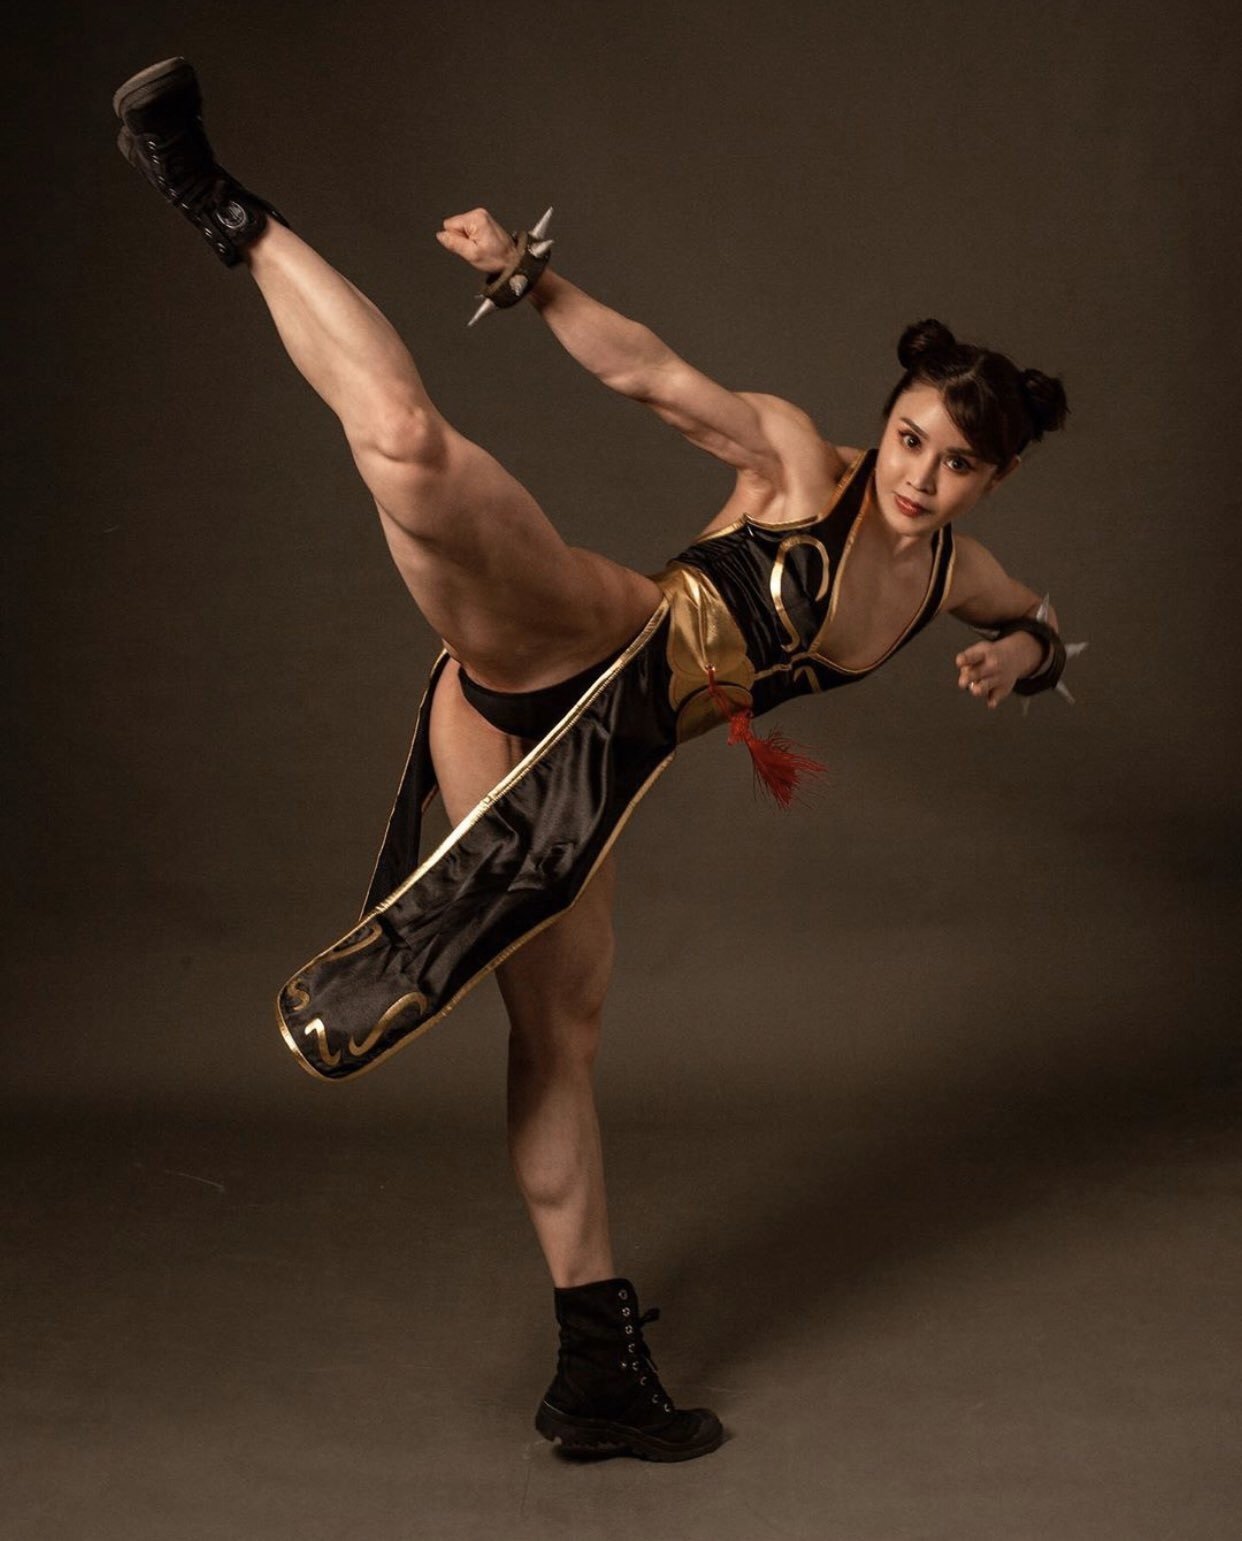 danielle spencer share nude female martial artist photos